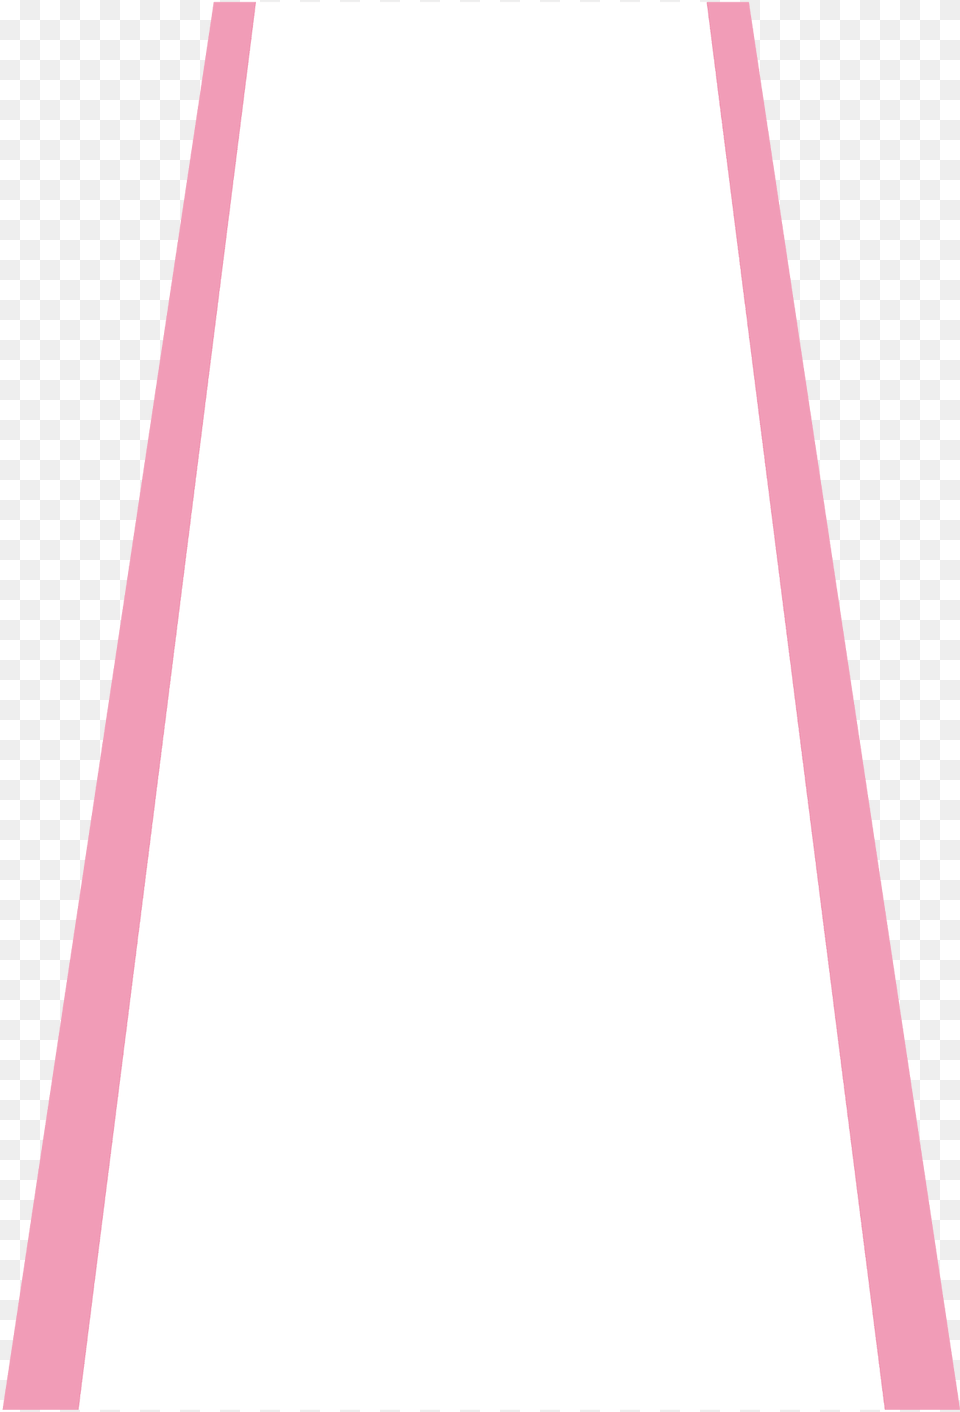 Pink Trapeze Light Clipart, Home Decor Free Transparent Png